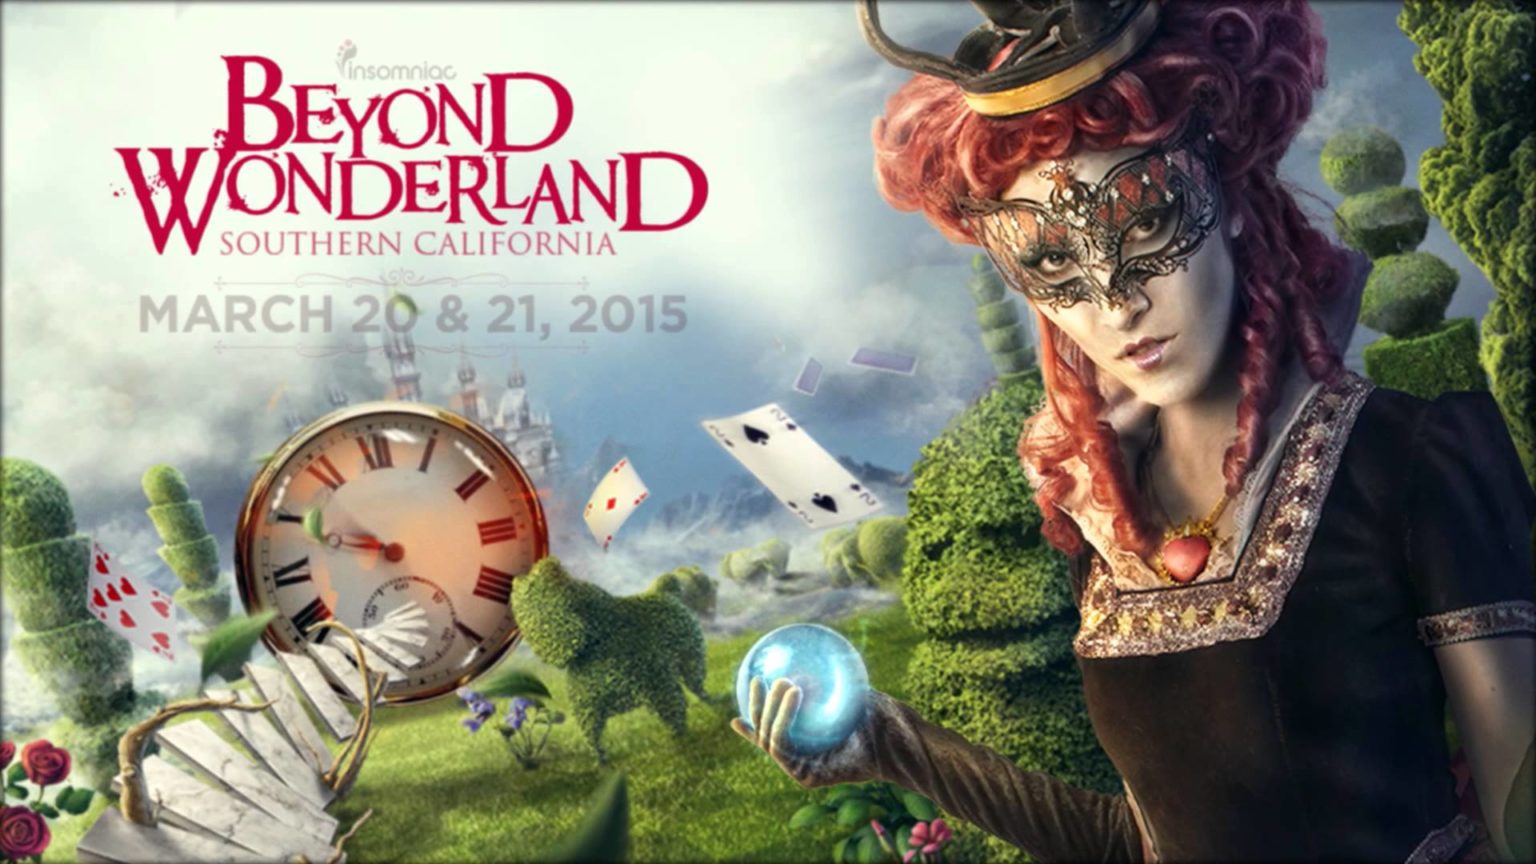 beyond wonderland lineup